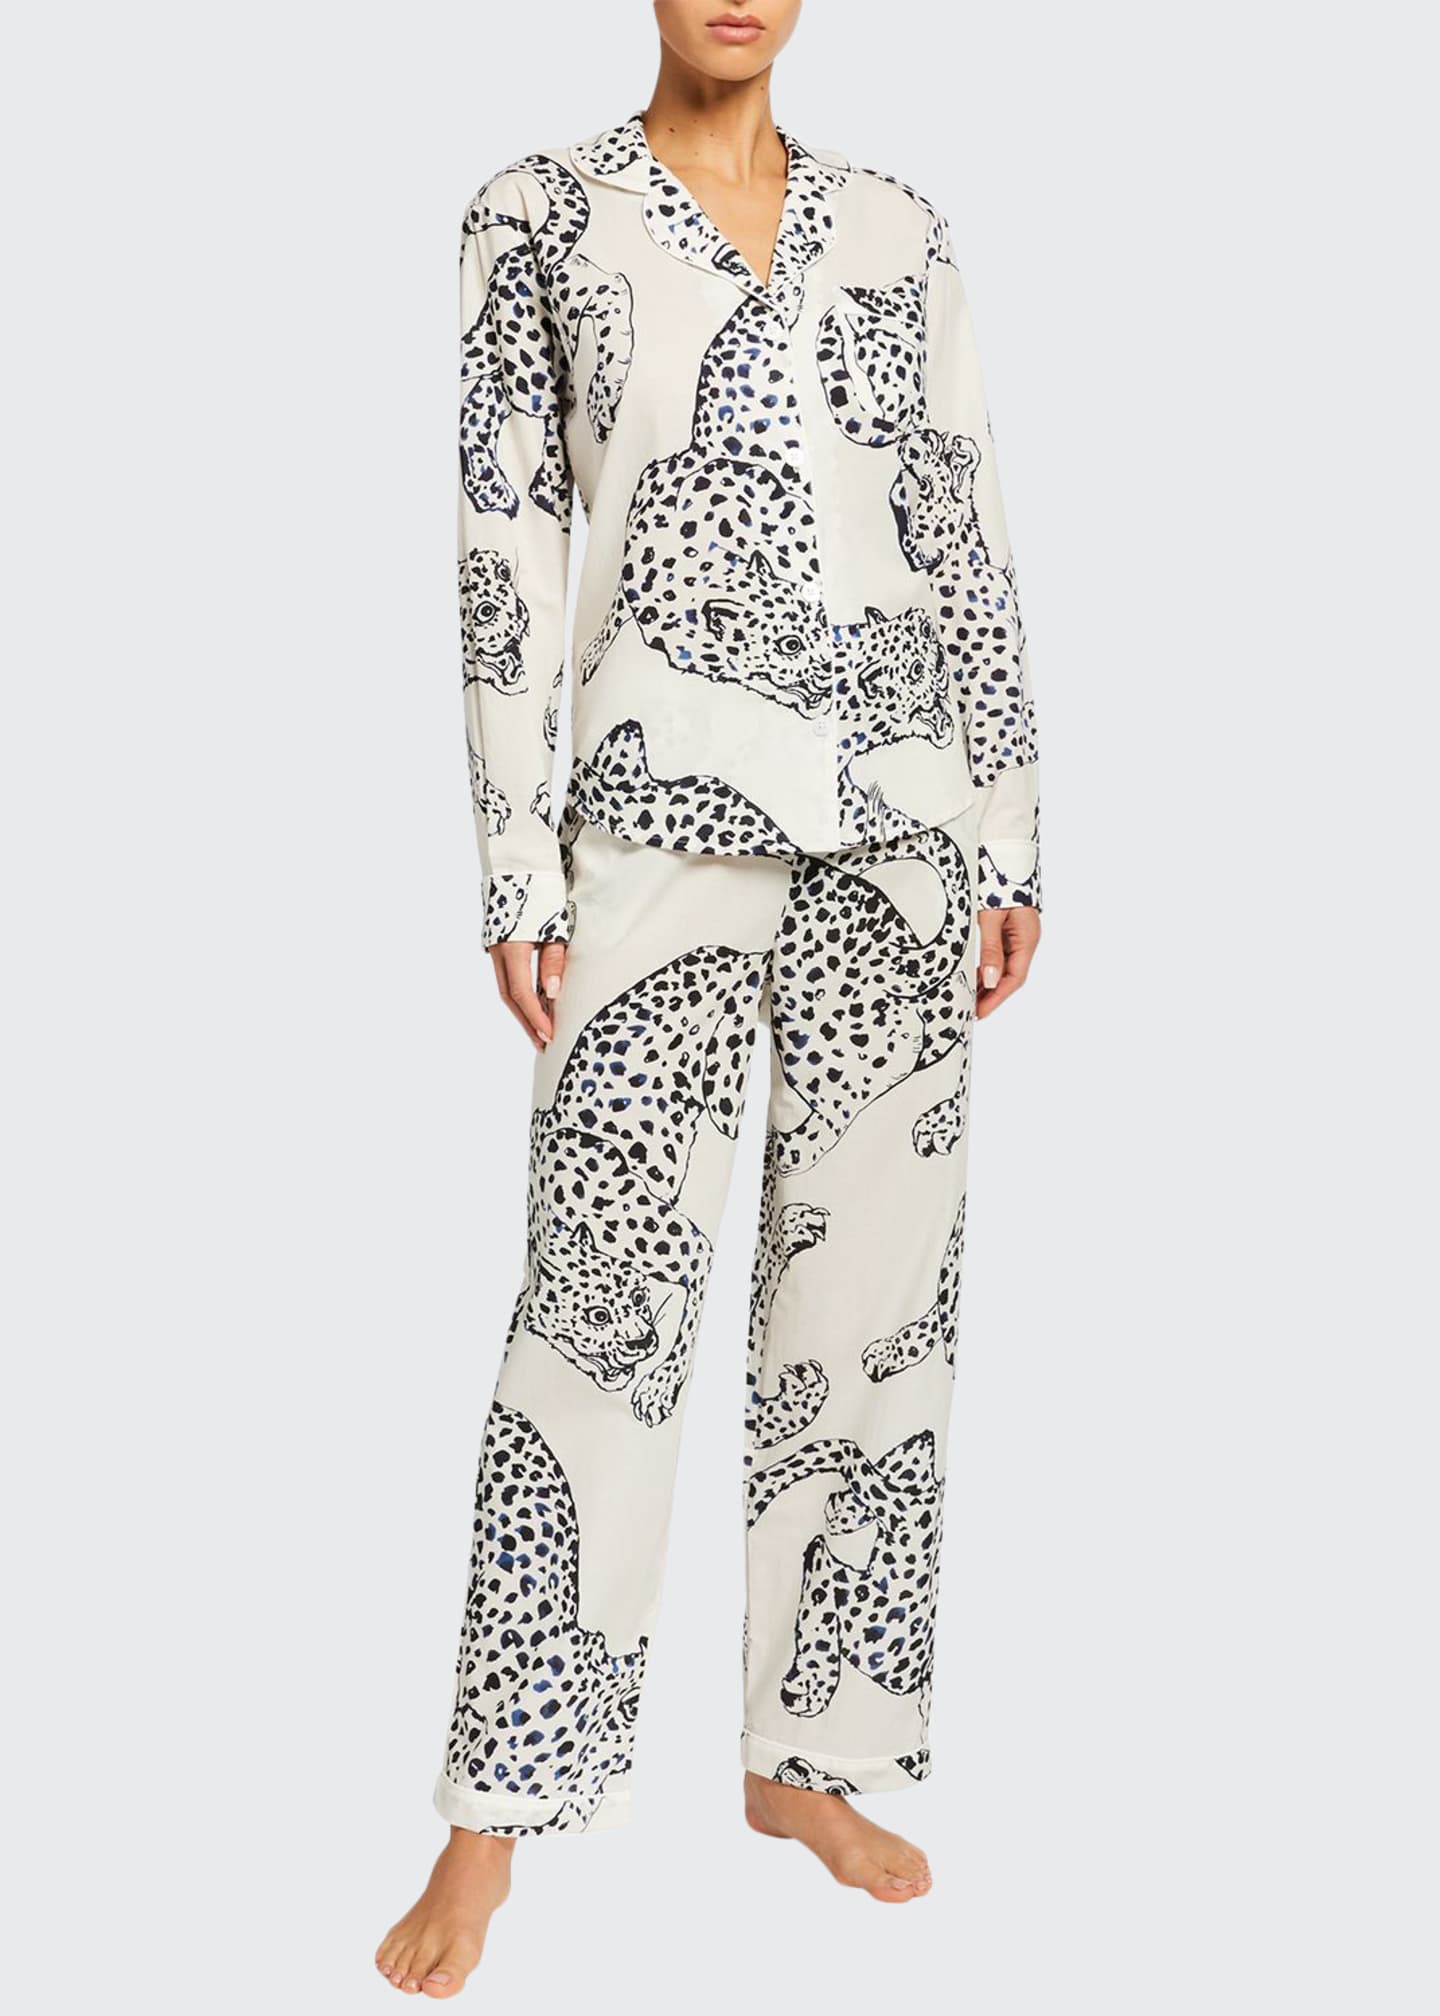 Desmond & Dempsey Large Leopard Long-Sleeve Pajama Set - Bergdorf Goodman